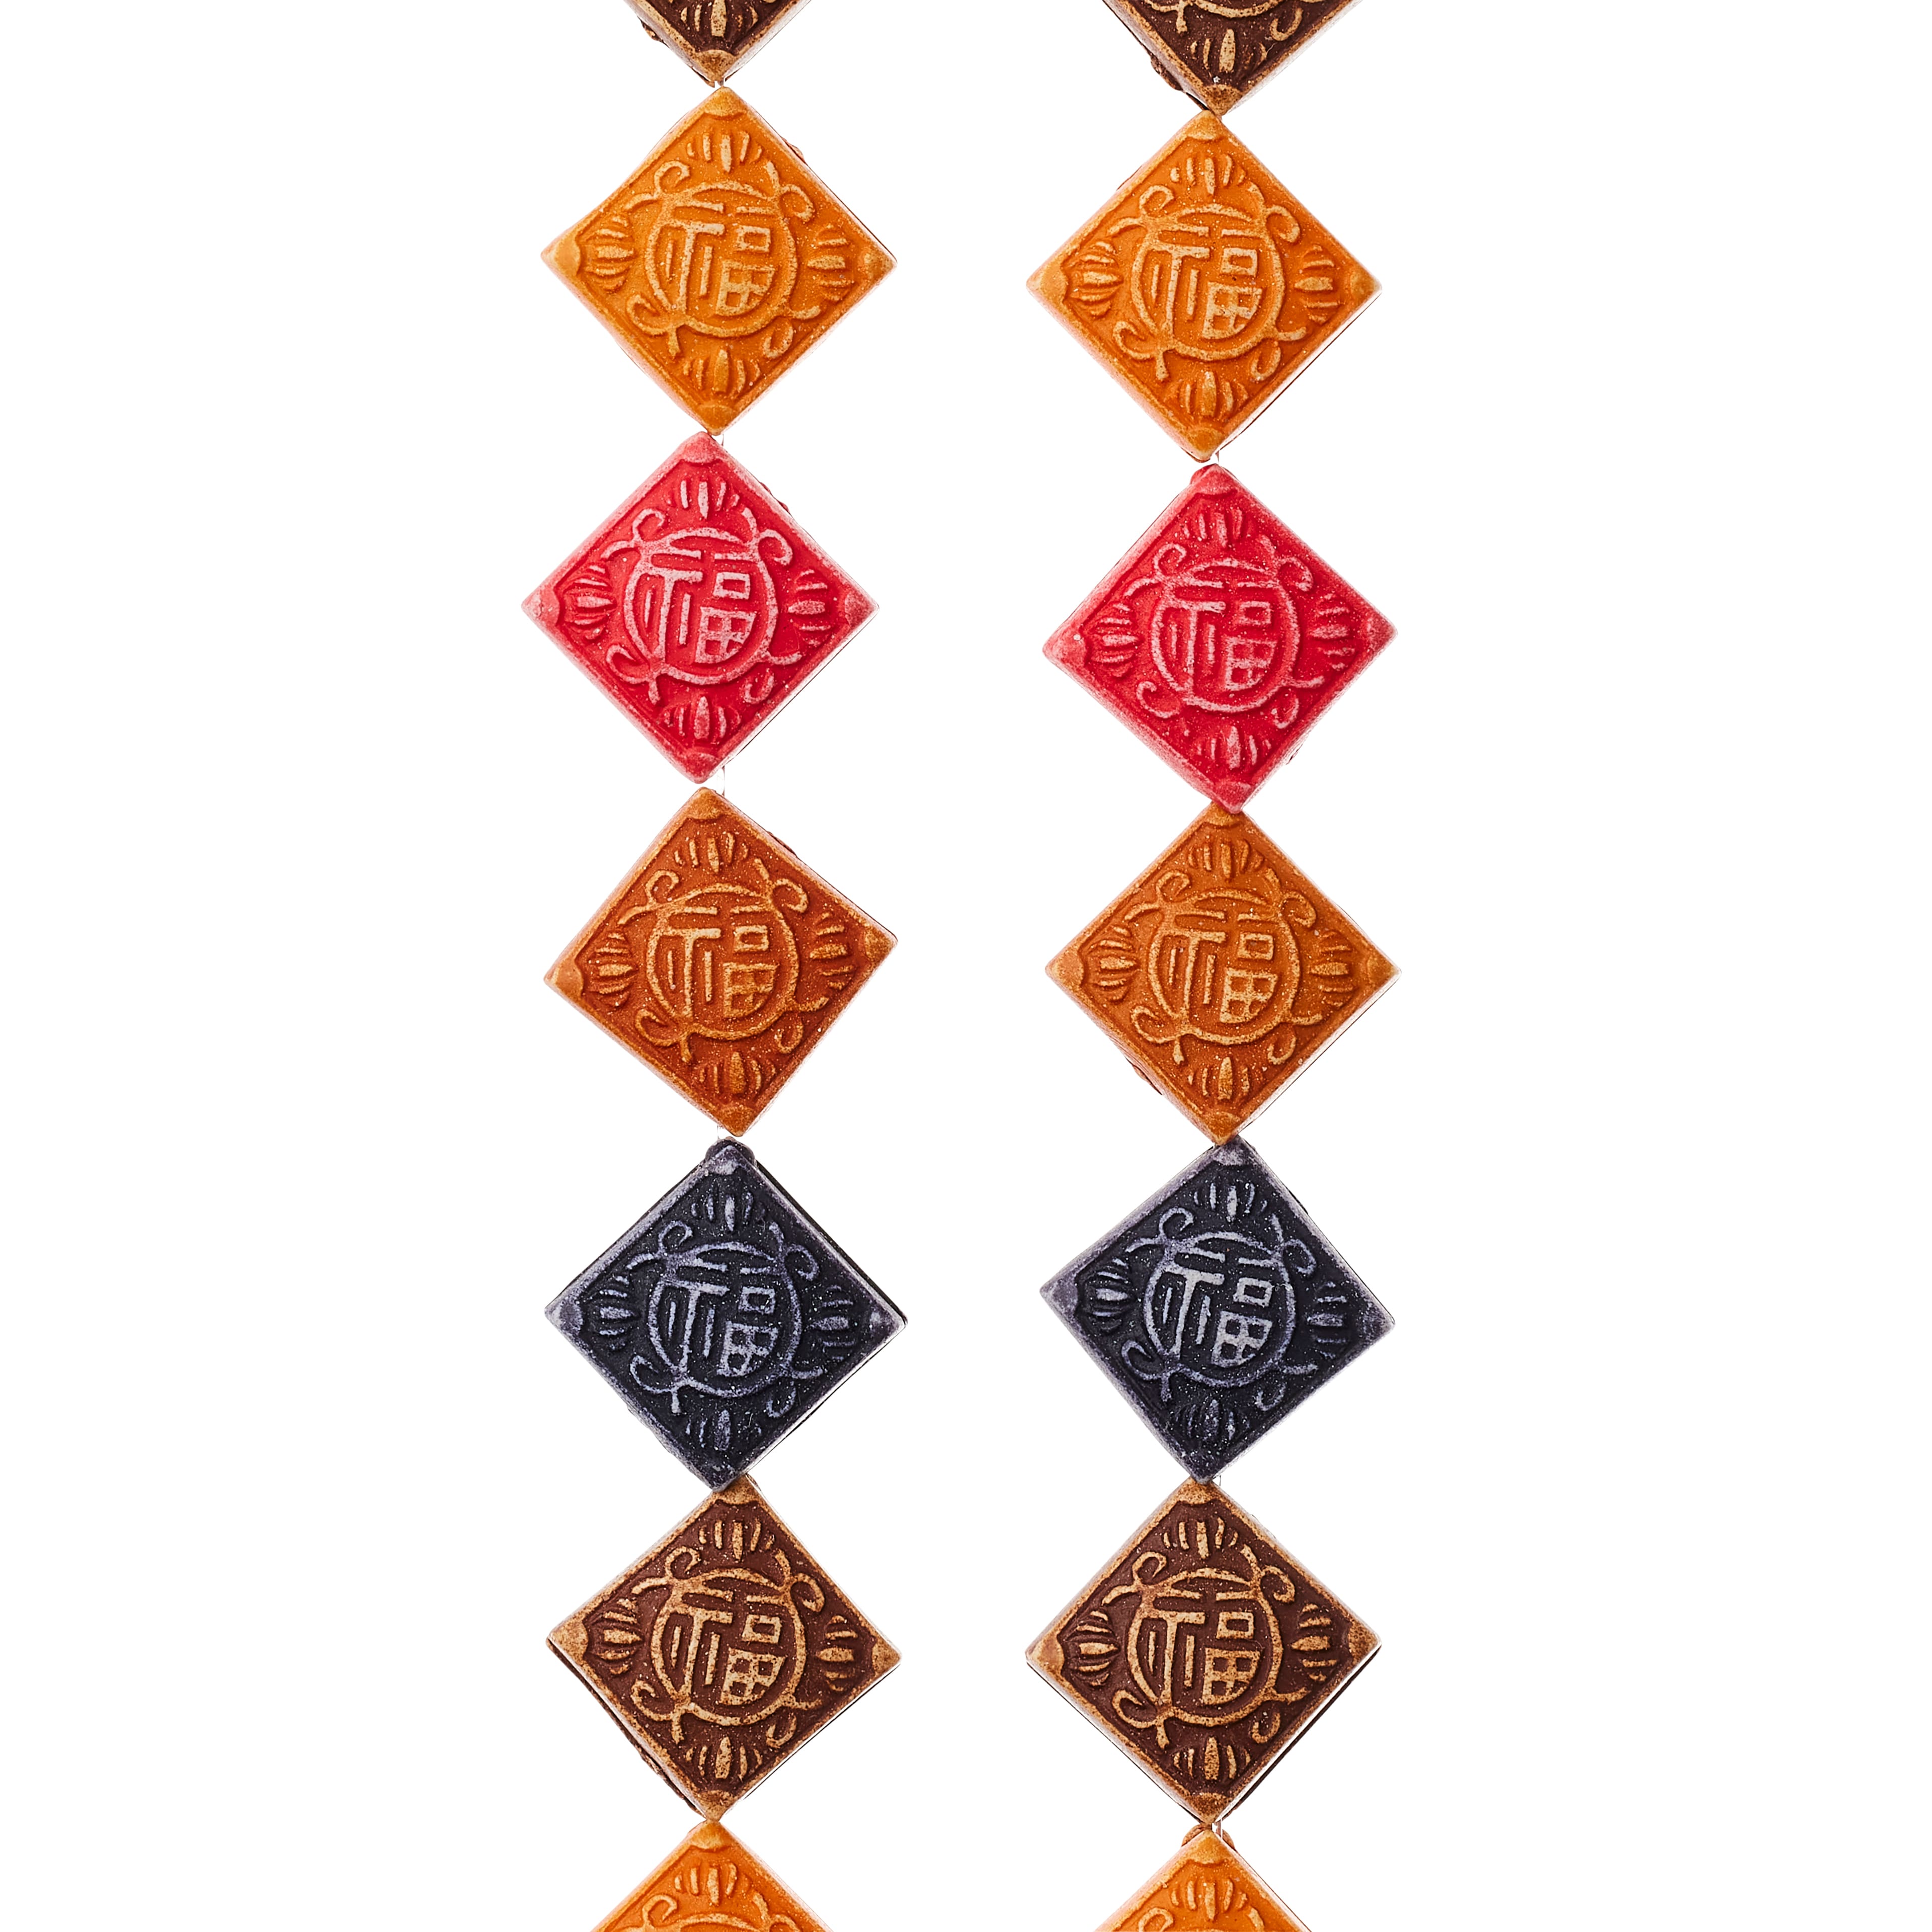 Orange Mix Diamond Resin Beads, 15mm by Bead Landing&#x2122;